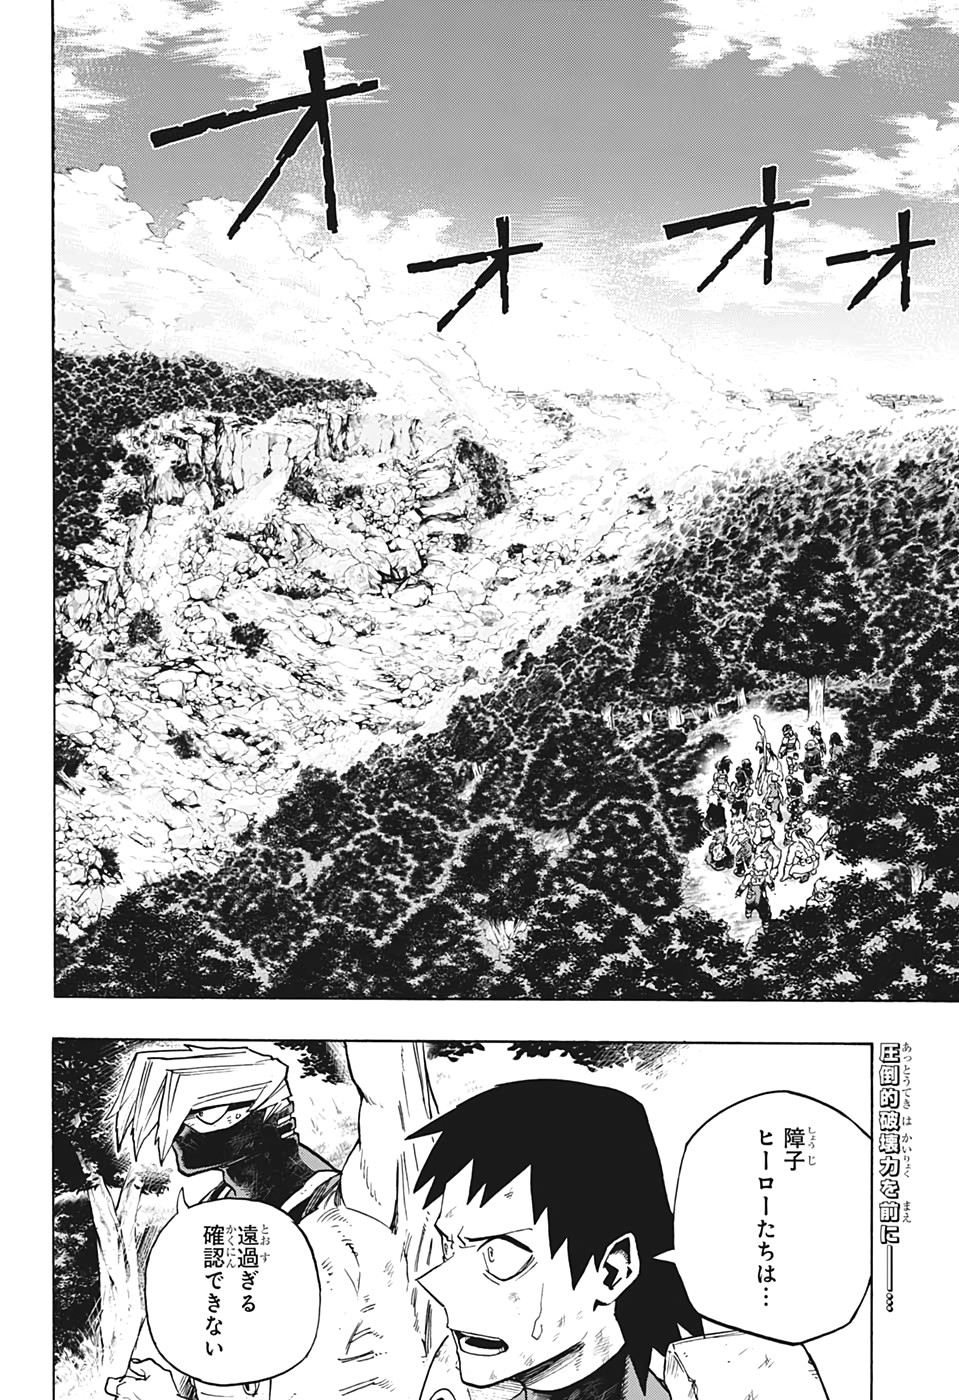 Boku no Hero Academia - Chapter 283 - Page 2